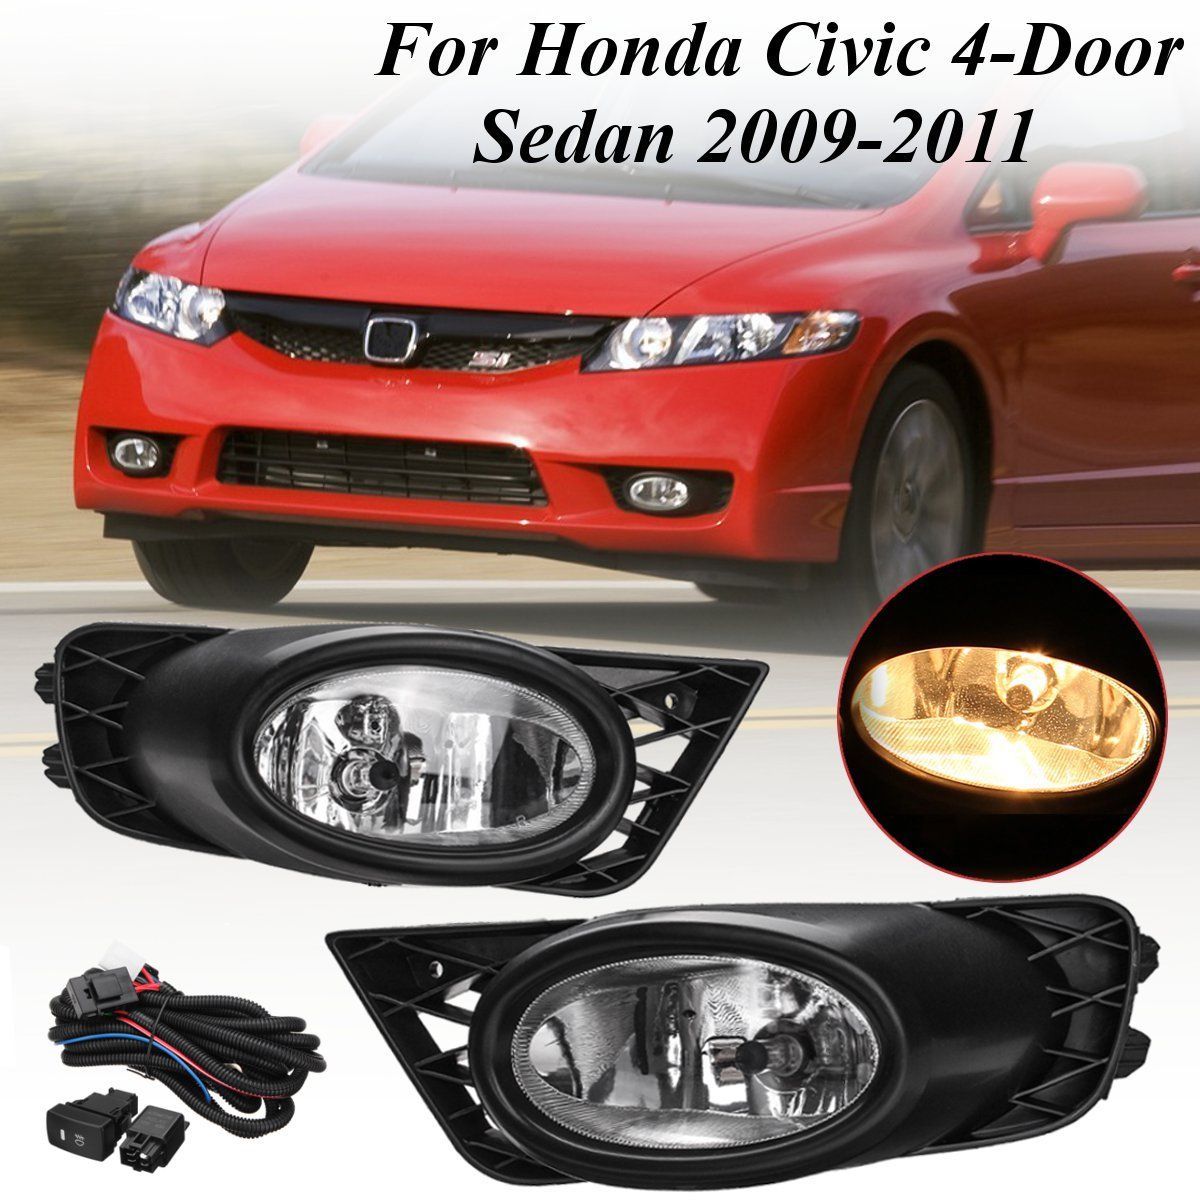 2PCS-H11-55W-Car-Front-Bumper-Fog-Lights-Lamp-for-Honda-Civic-4-Door-Sedan-2009-2011-1307404